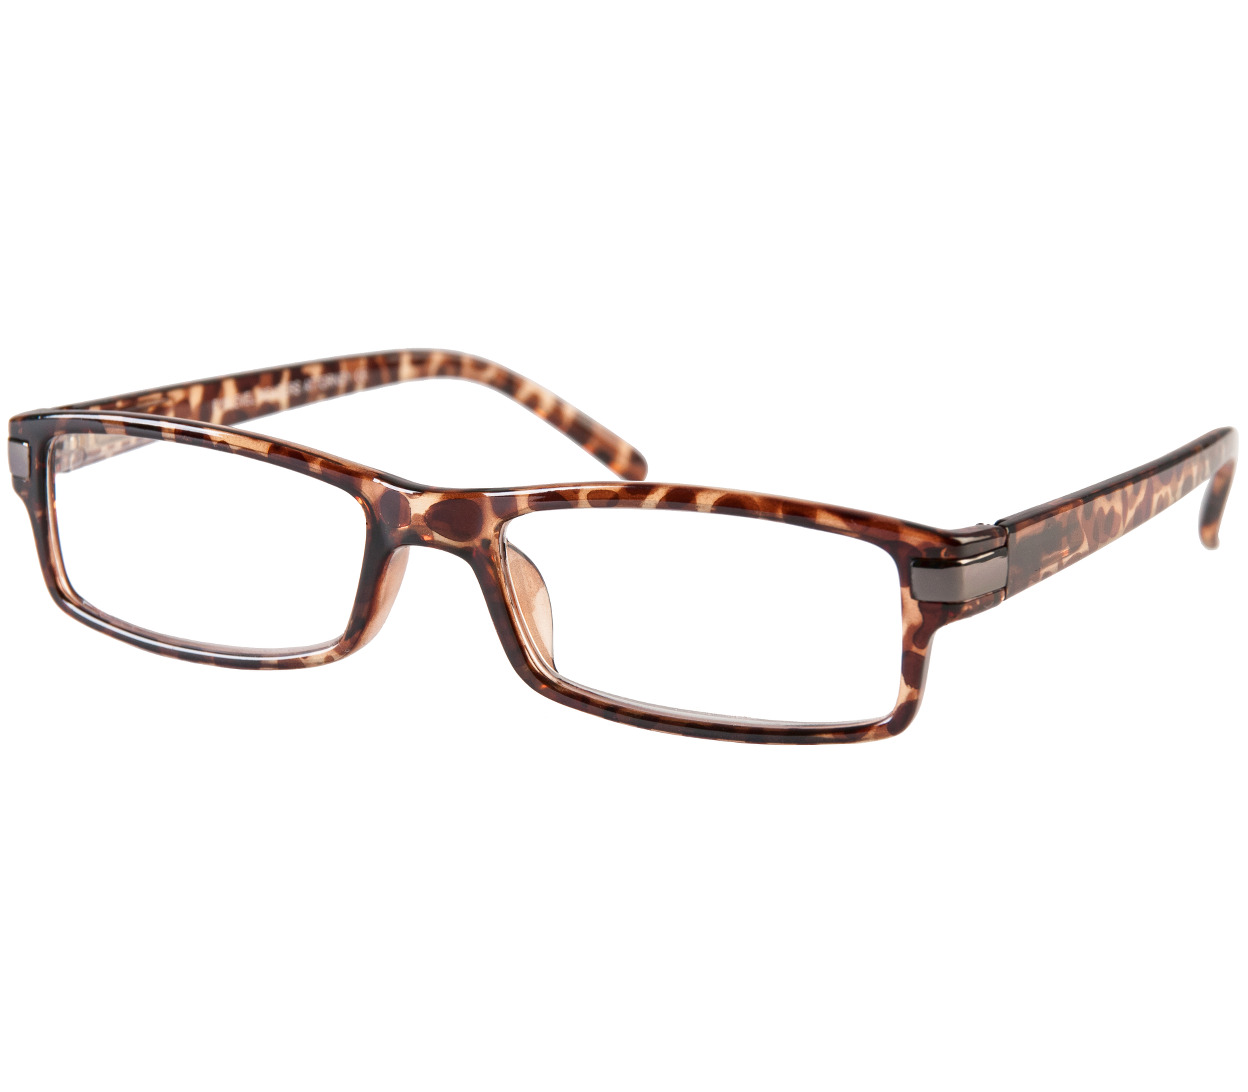 Attorney (Tortoiseshell) Reading Glasses - Tiger Specs